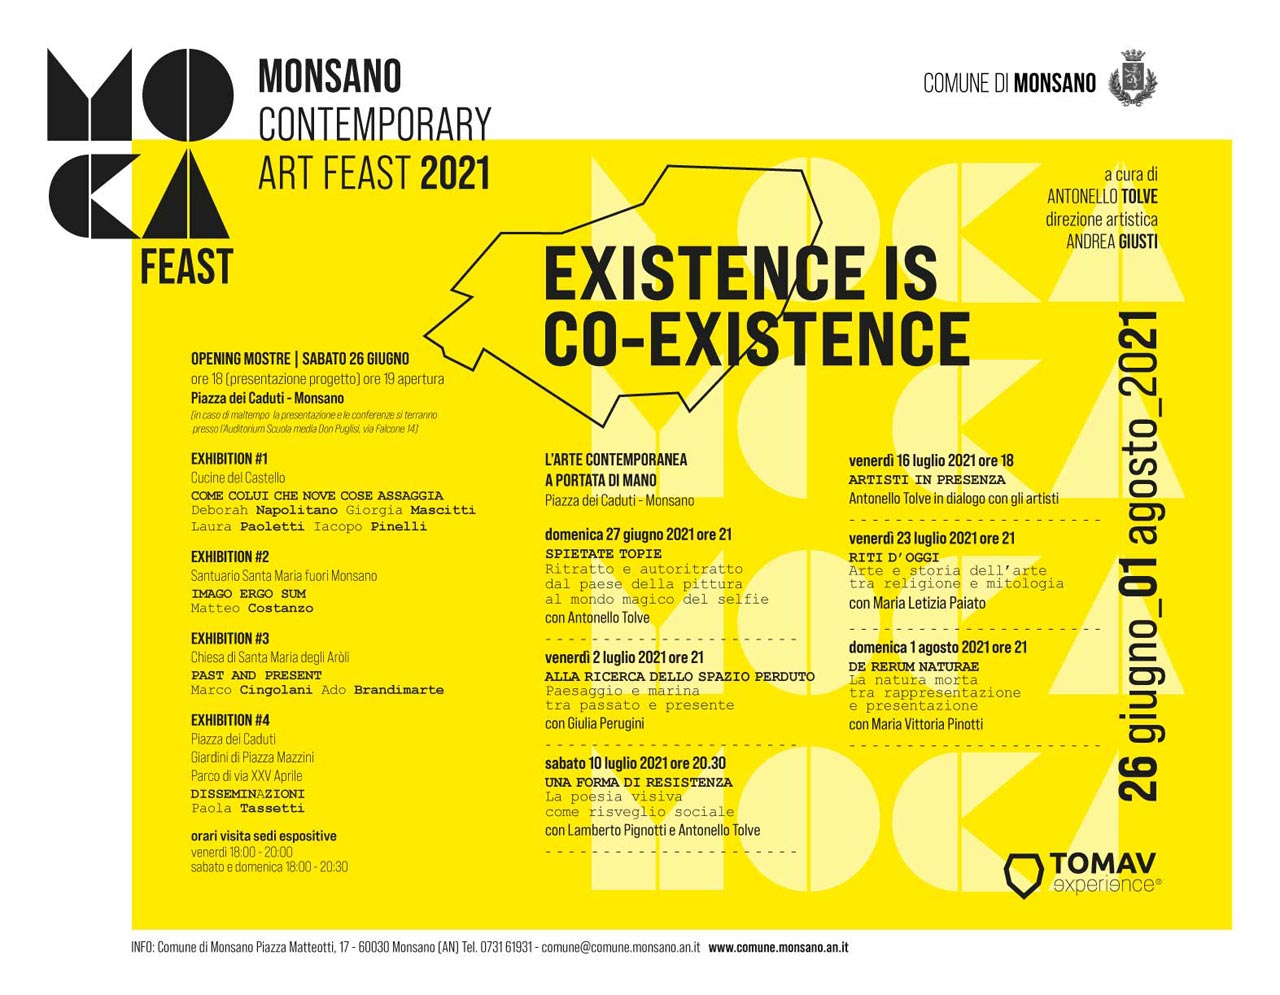 MOCA, MONSANO CONTEMPORARY ART FEAST: EXISTENCE IS CO-EXISTENCE.